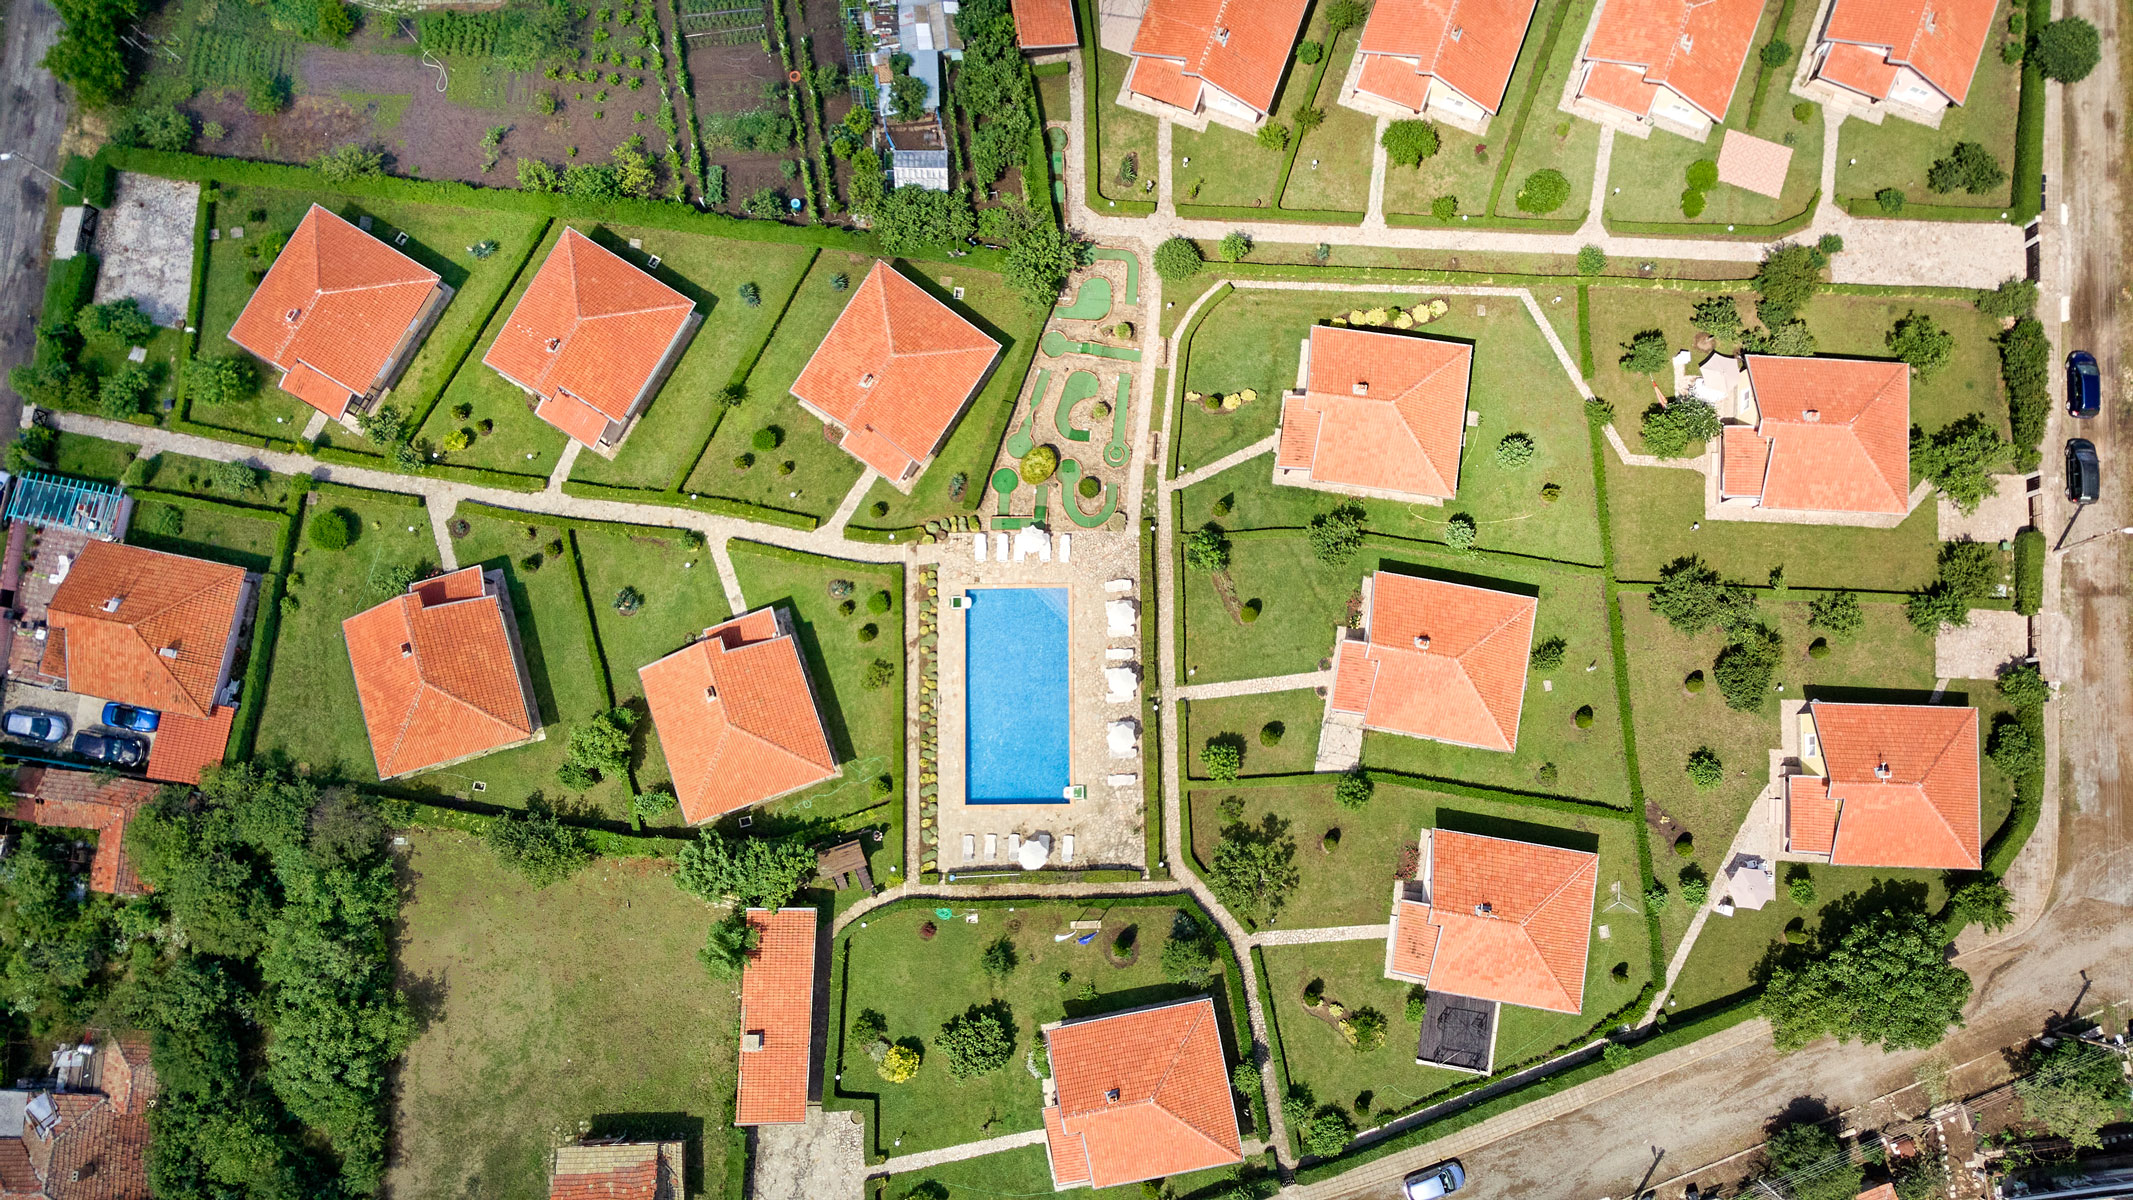 Sunny Hills Villas - Ferienhäuser mit Pool in Bulgarien zu mieten